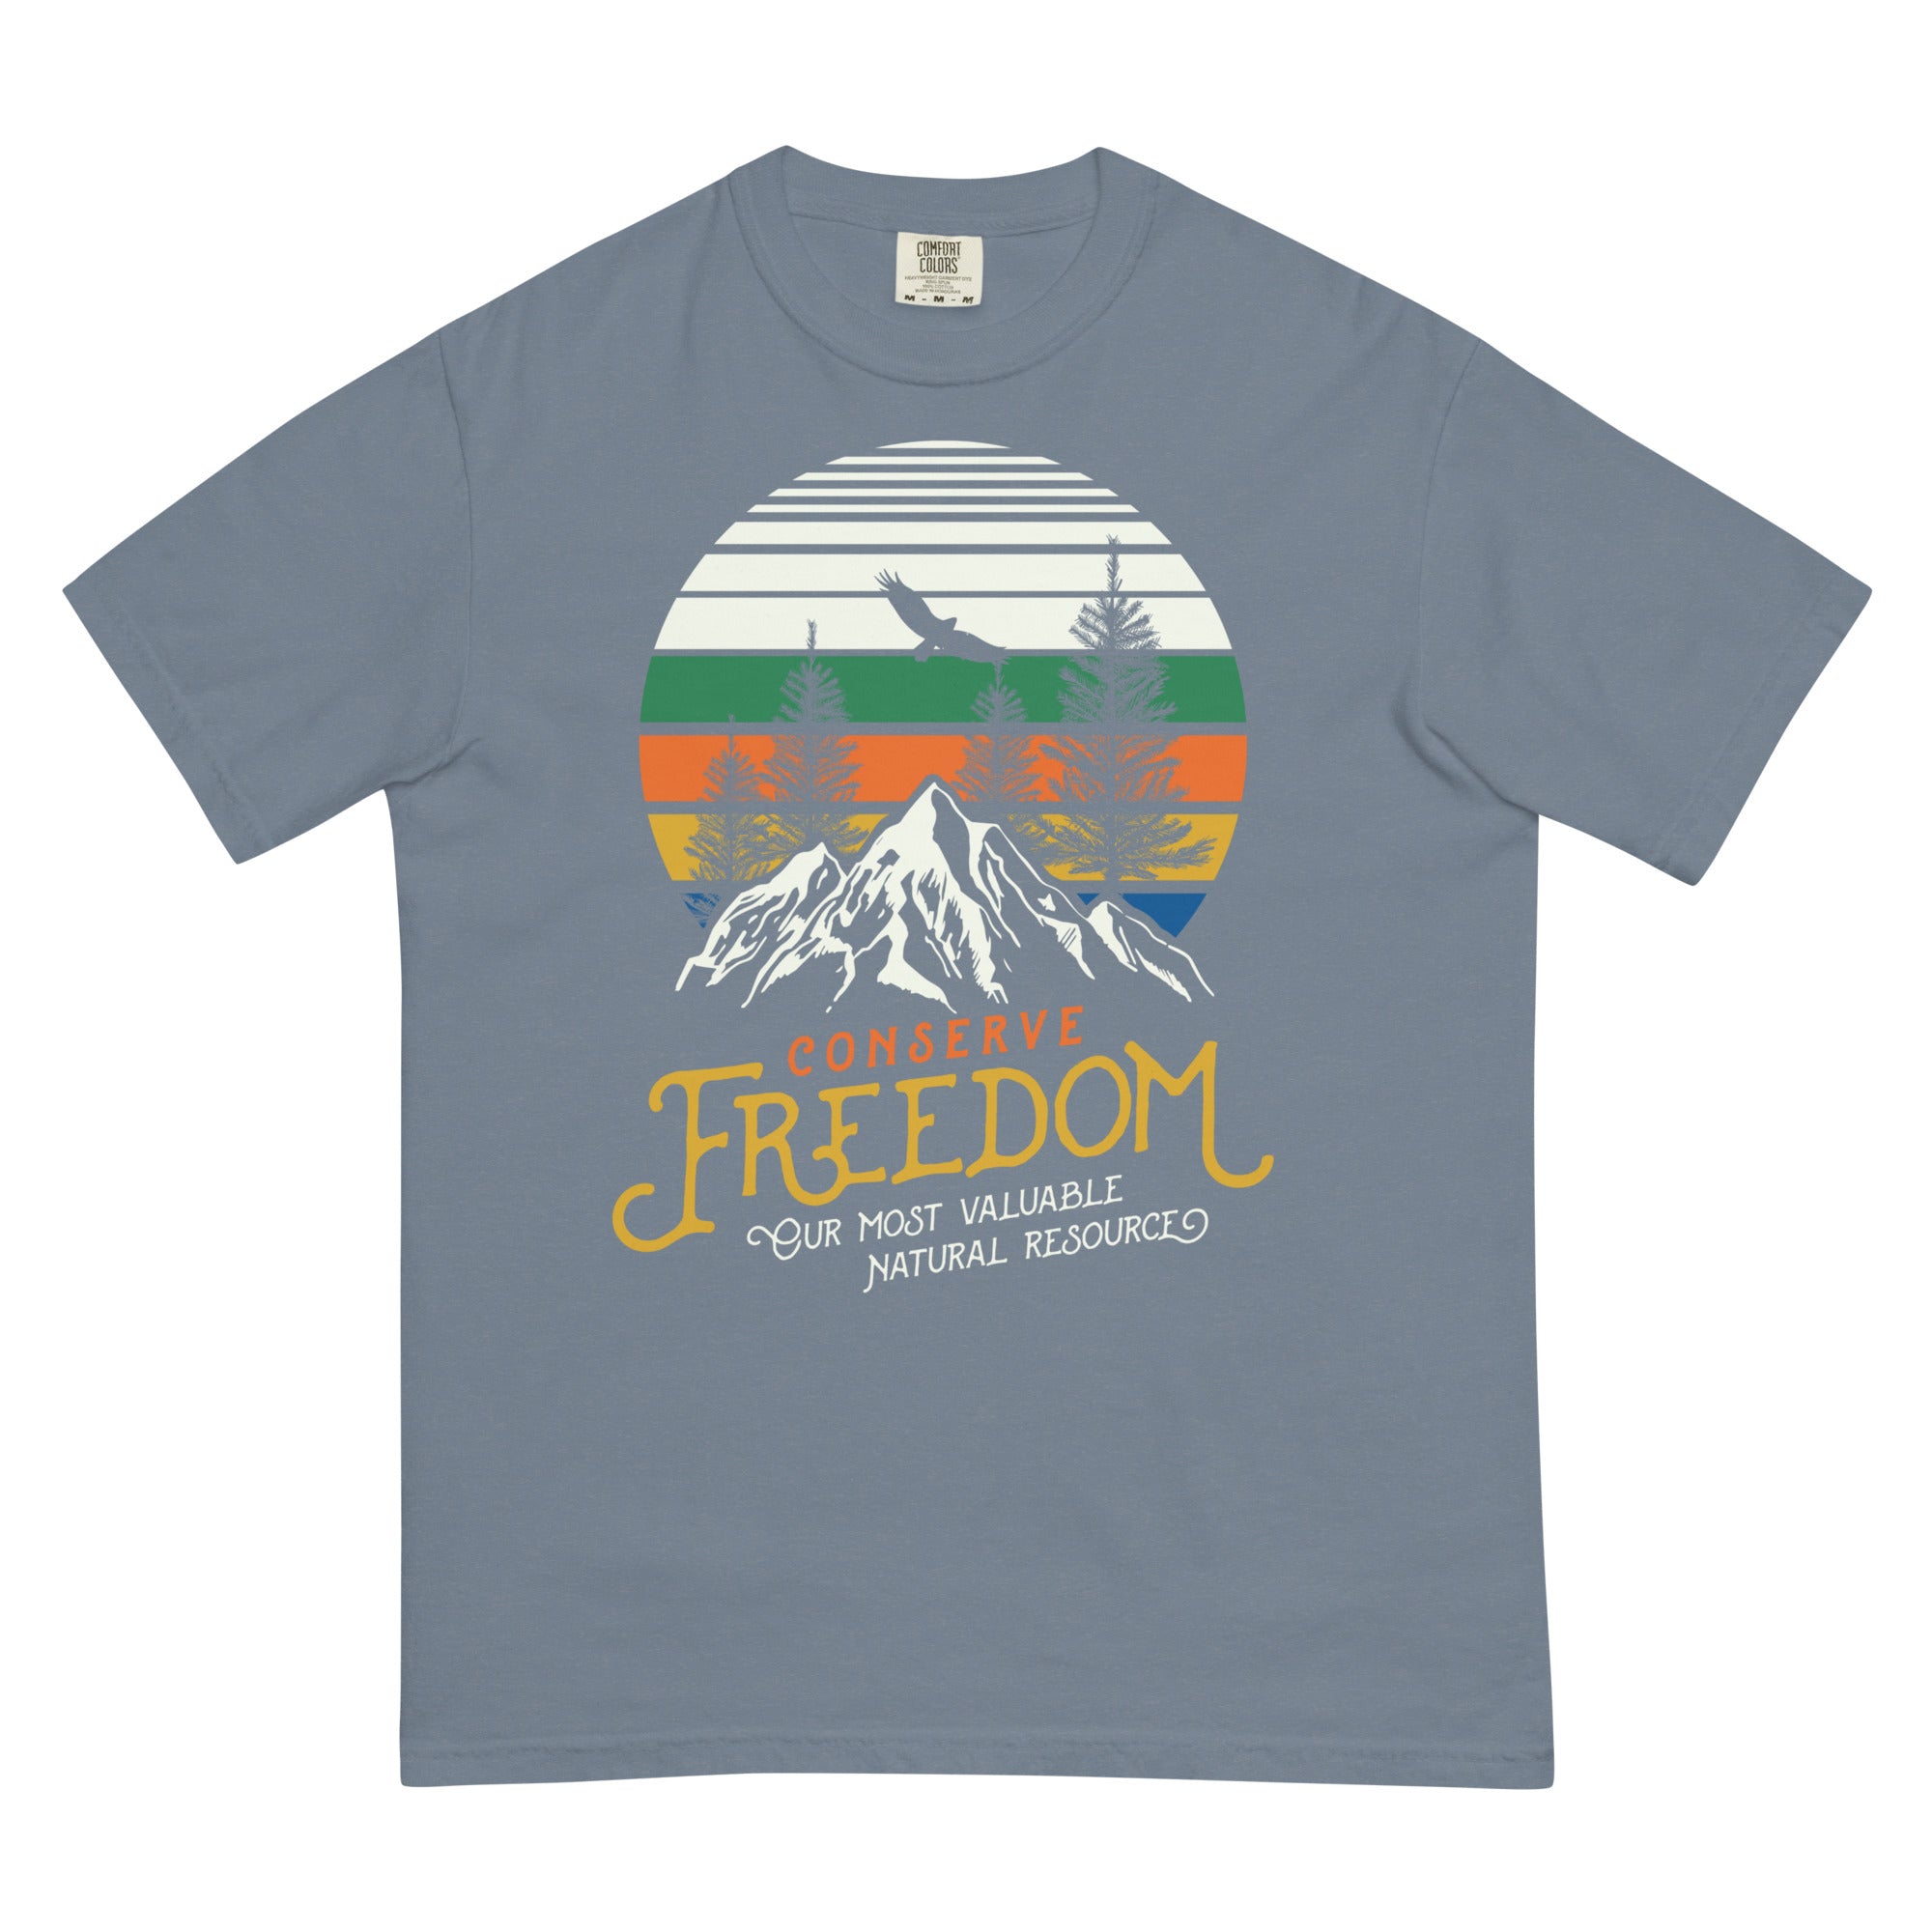 Conserve Freedom Men’s Garment-dyed Heavyweight T-shirt